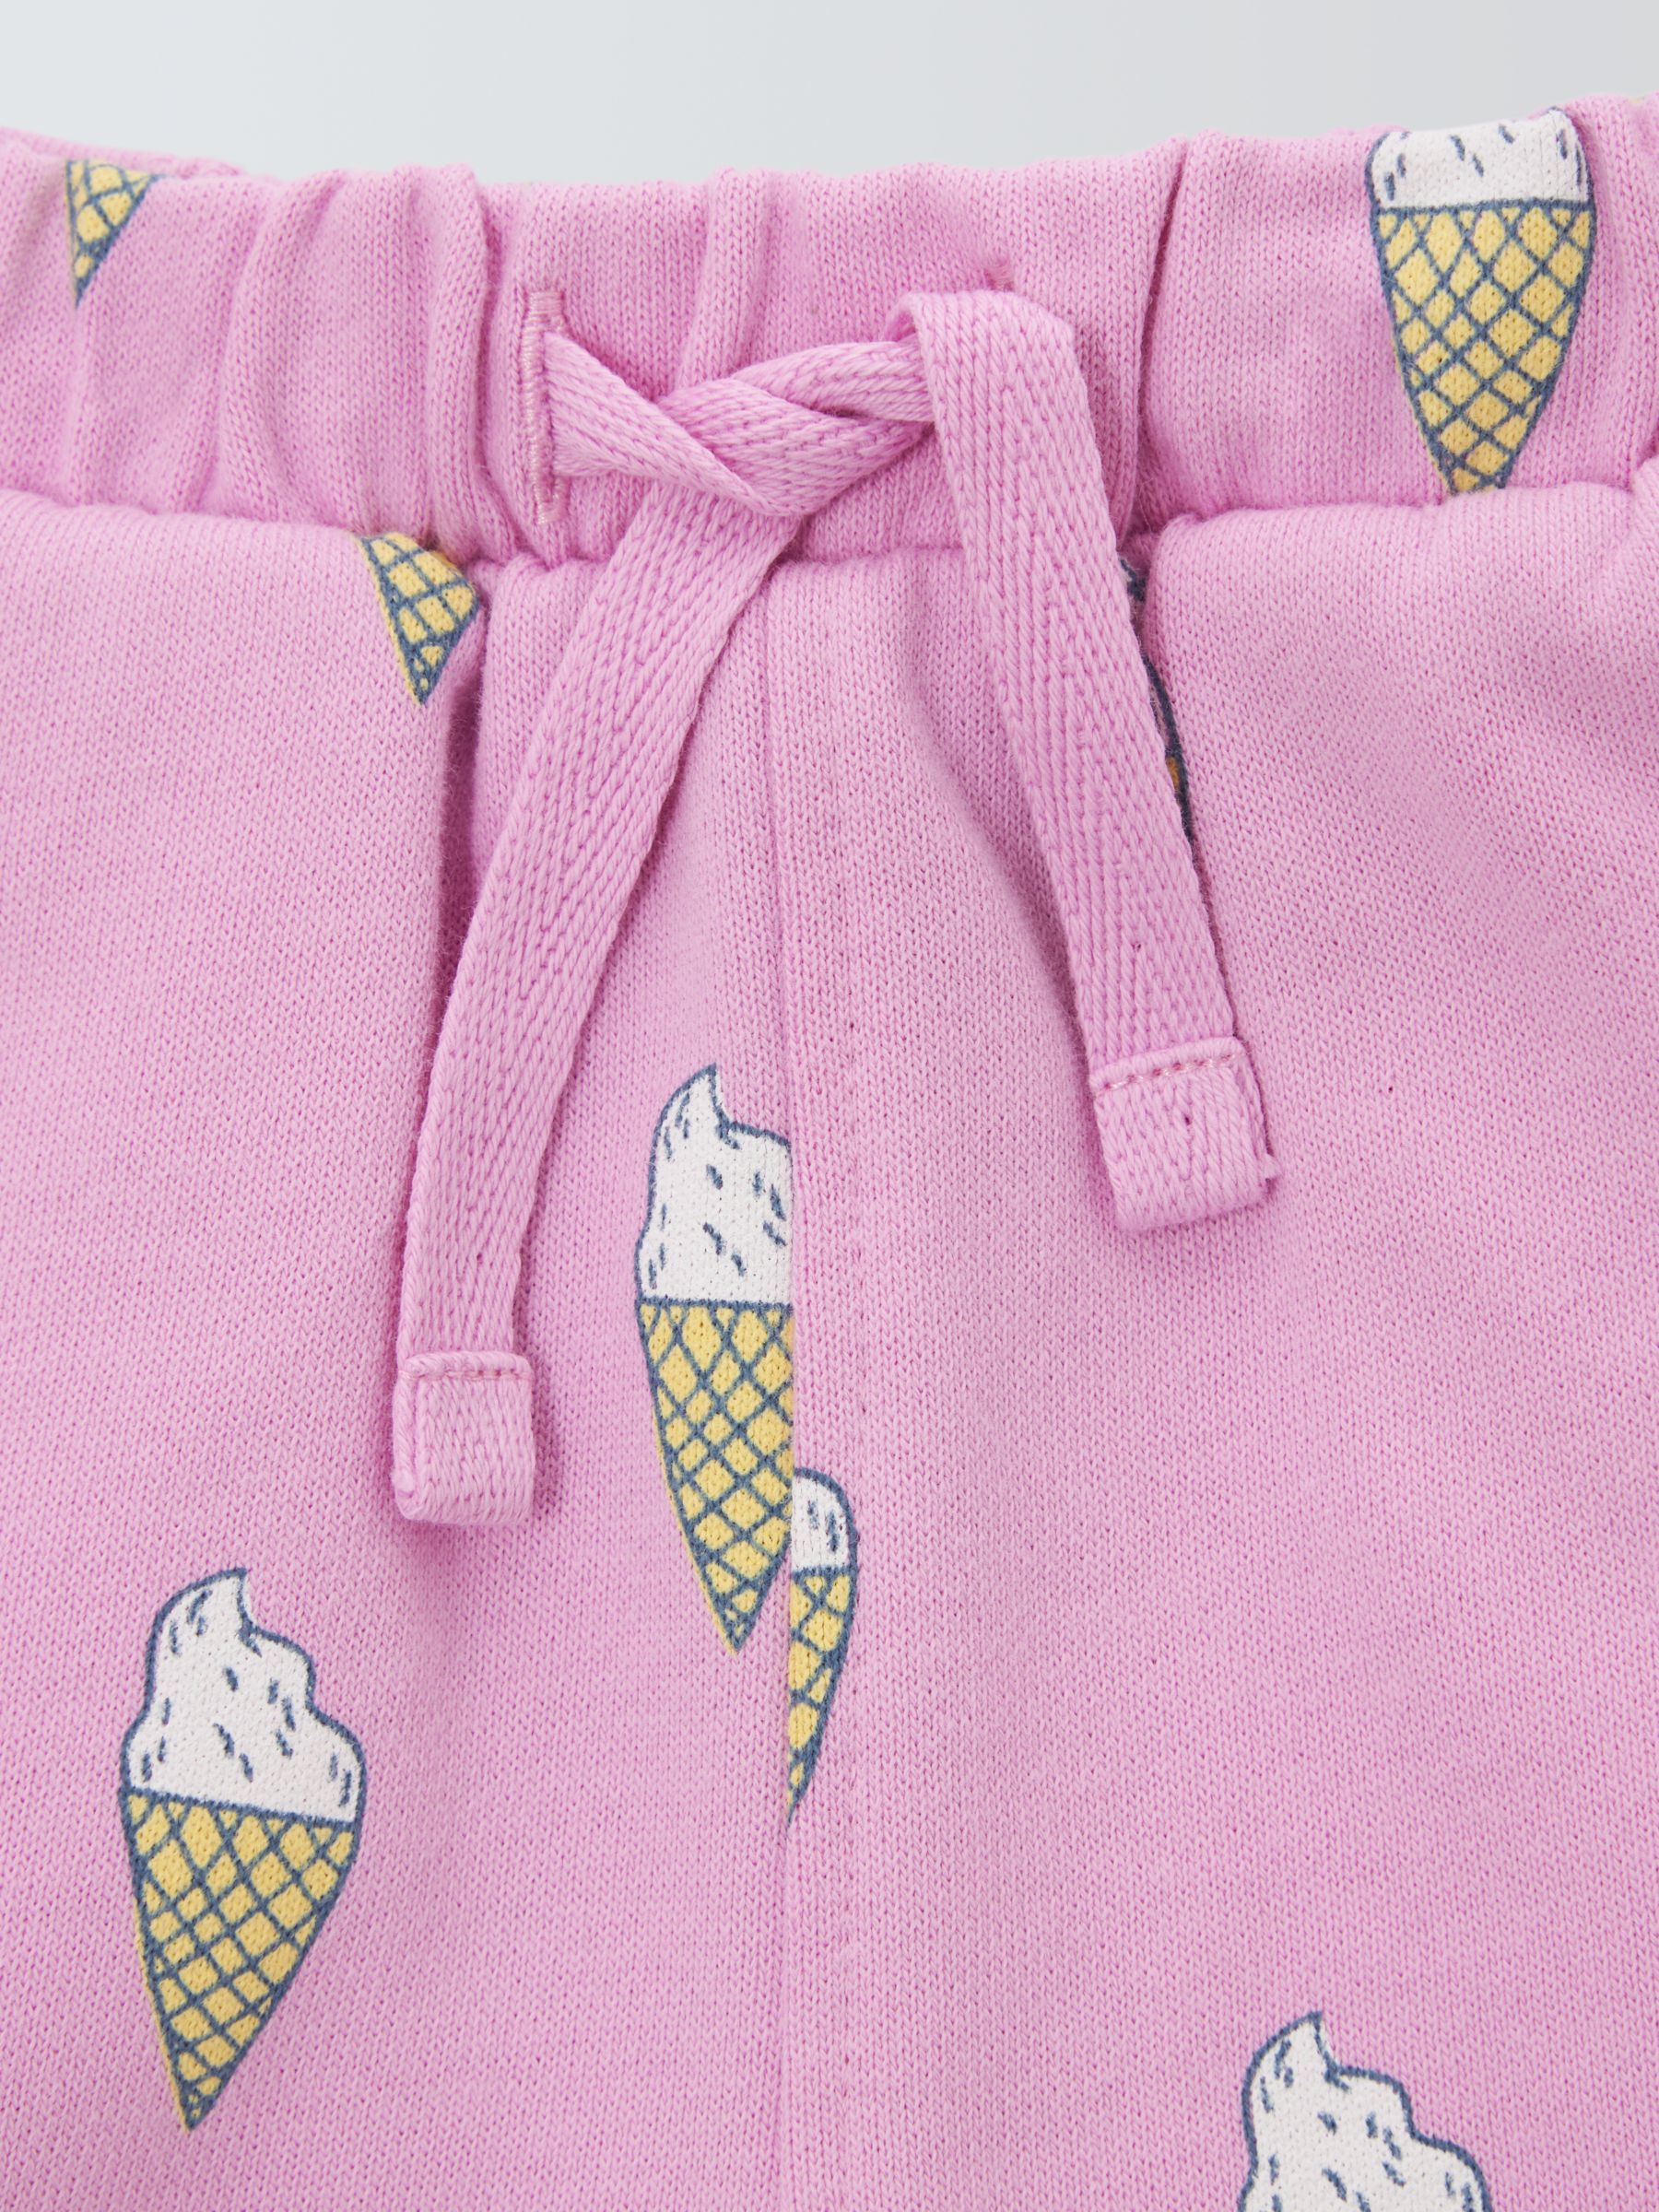 John Lewis ANYDAY Baby Ice Cream Print Shorts, Pink, 2-3 years